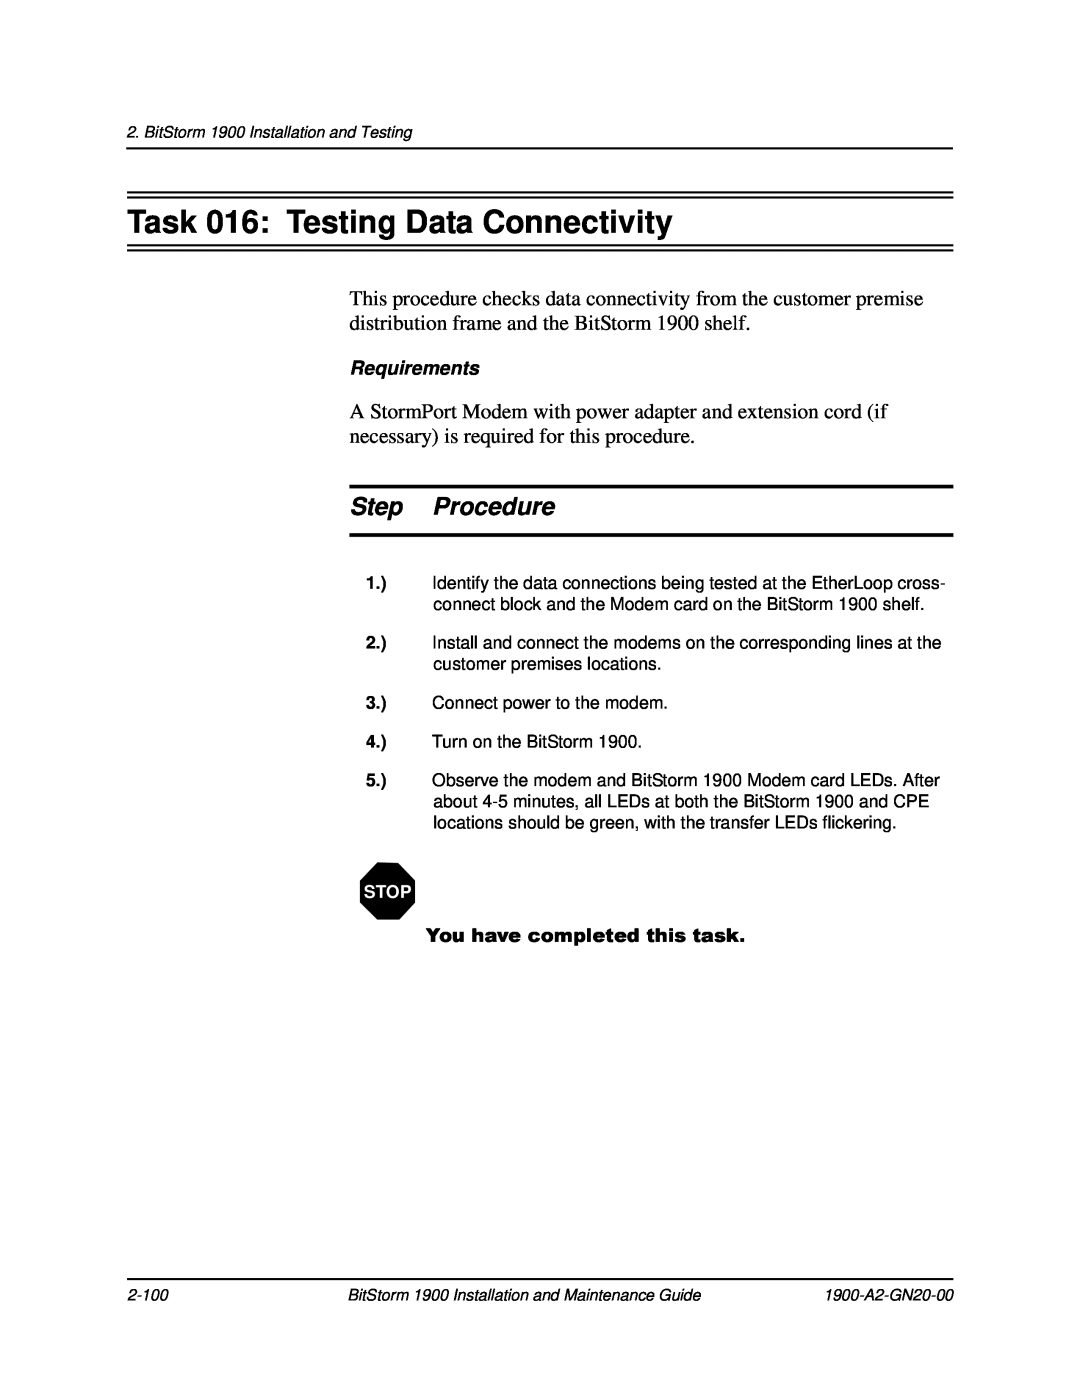 Paradyne 1900 manual Task 016 Testing Data Connectivity, Step Procedure 